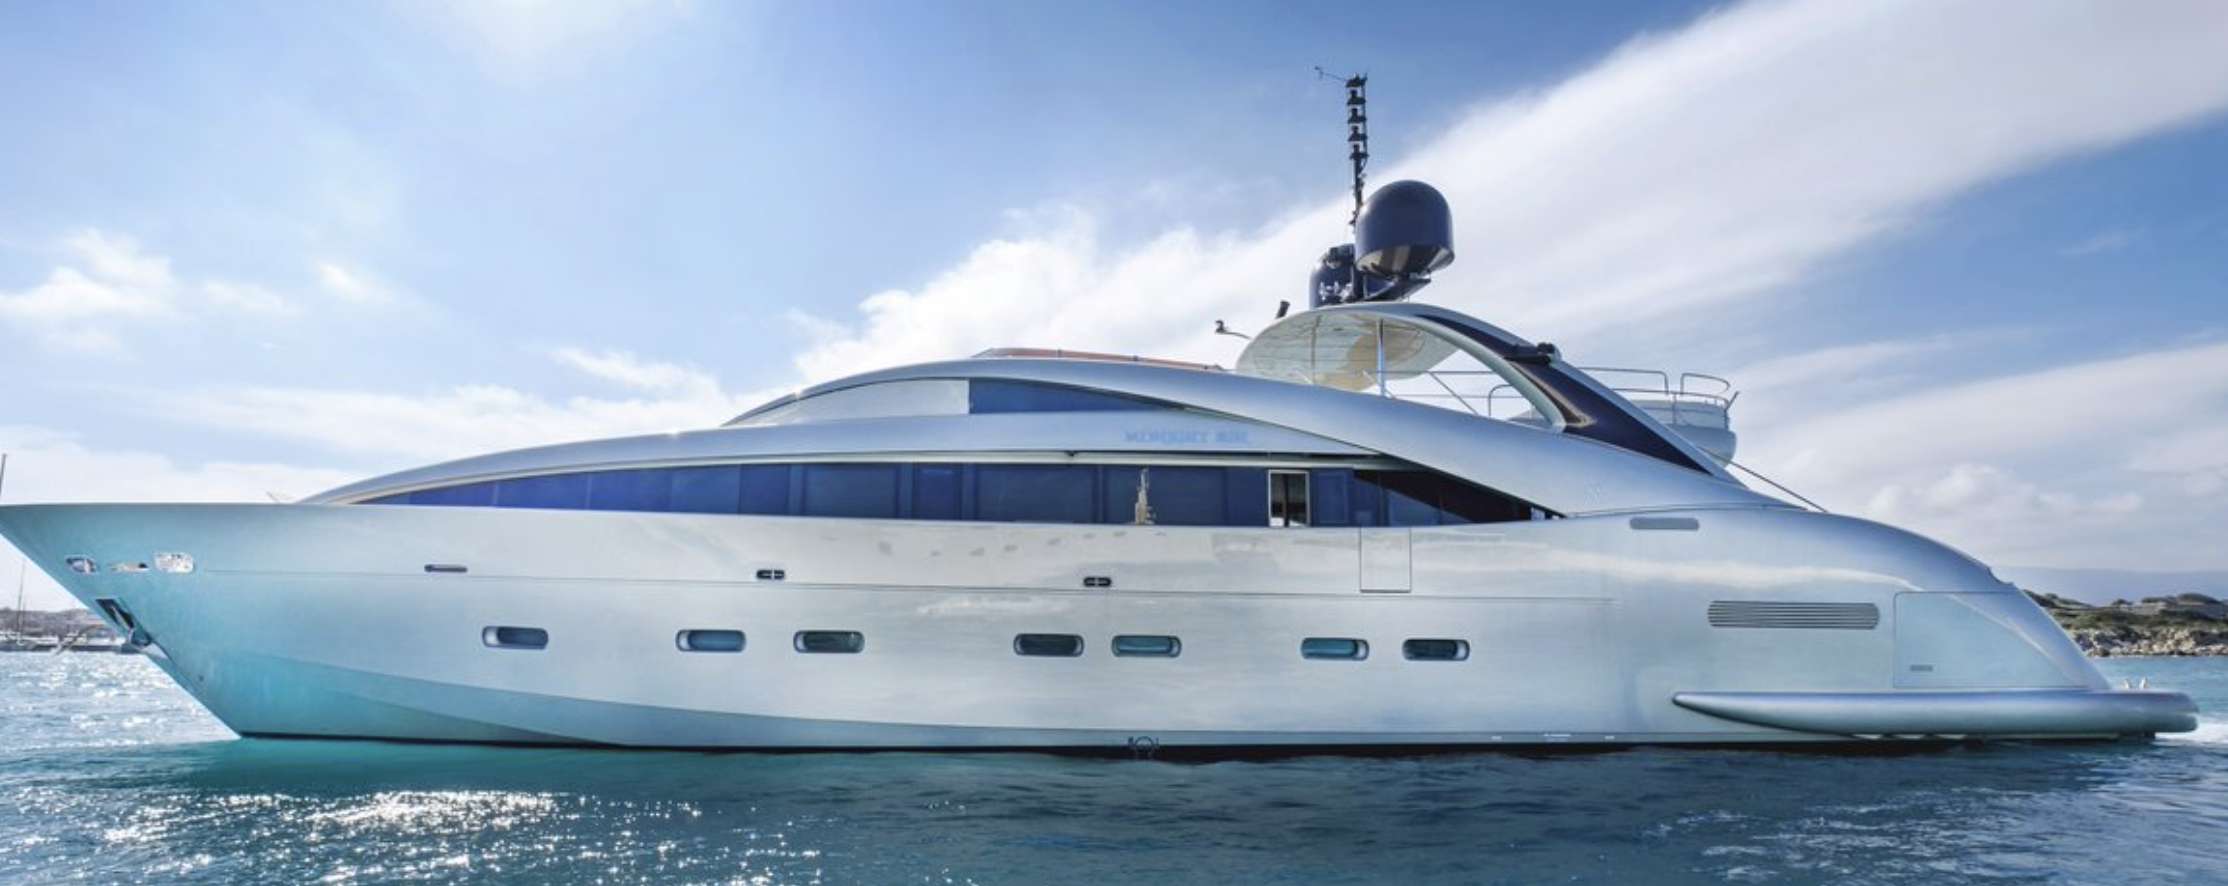 YCM 120 - Yacht Charter Port de Pollença & Boat hire in Riviera, Corsica, Sardinia, Spain, Balearics, Caribbean 4